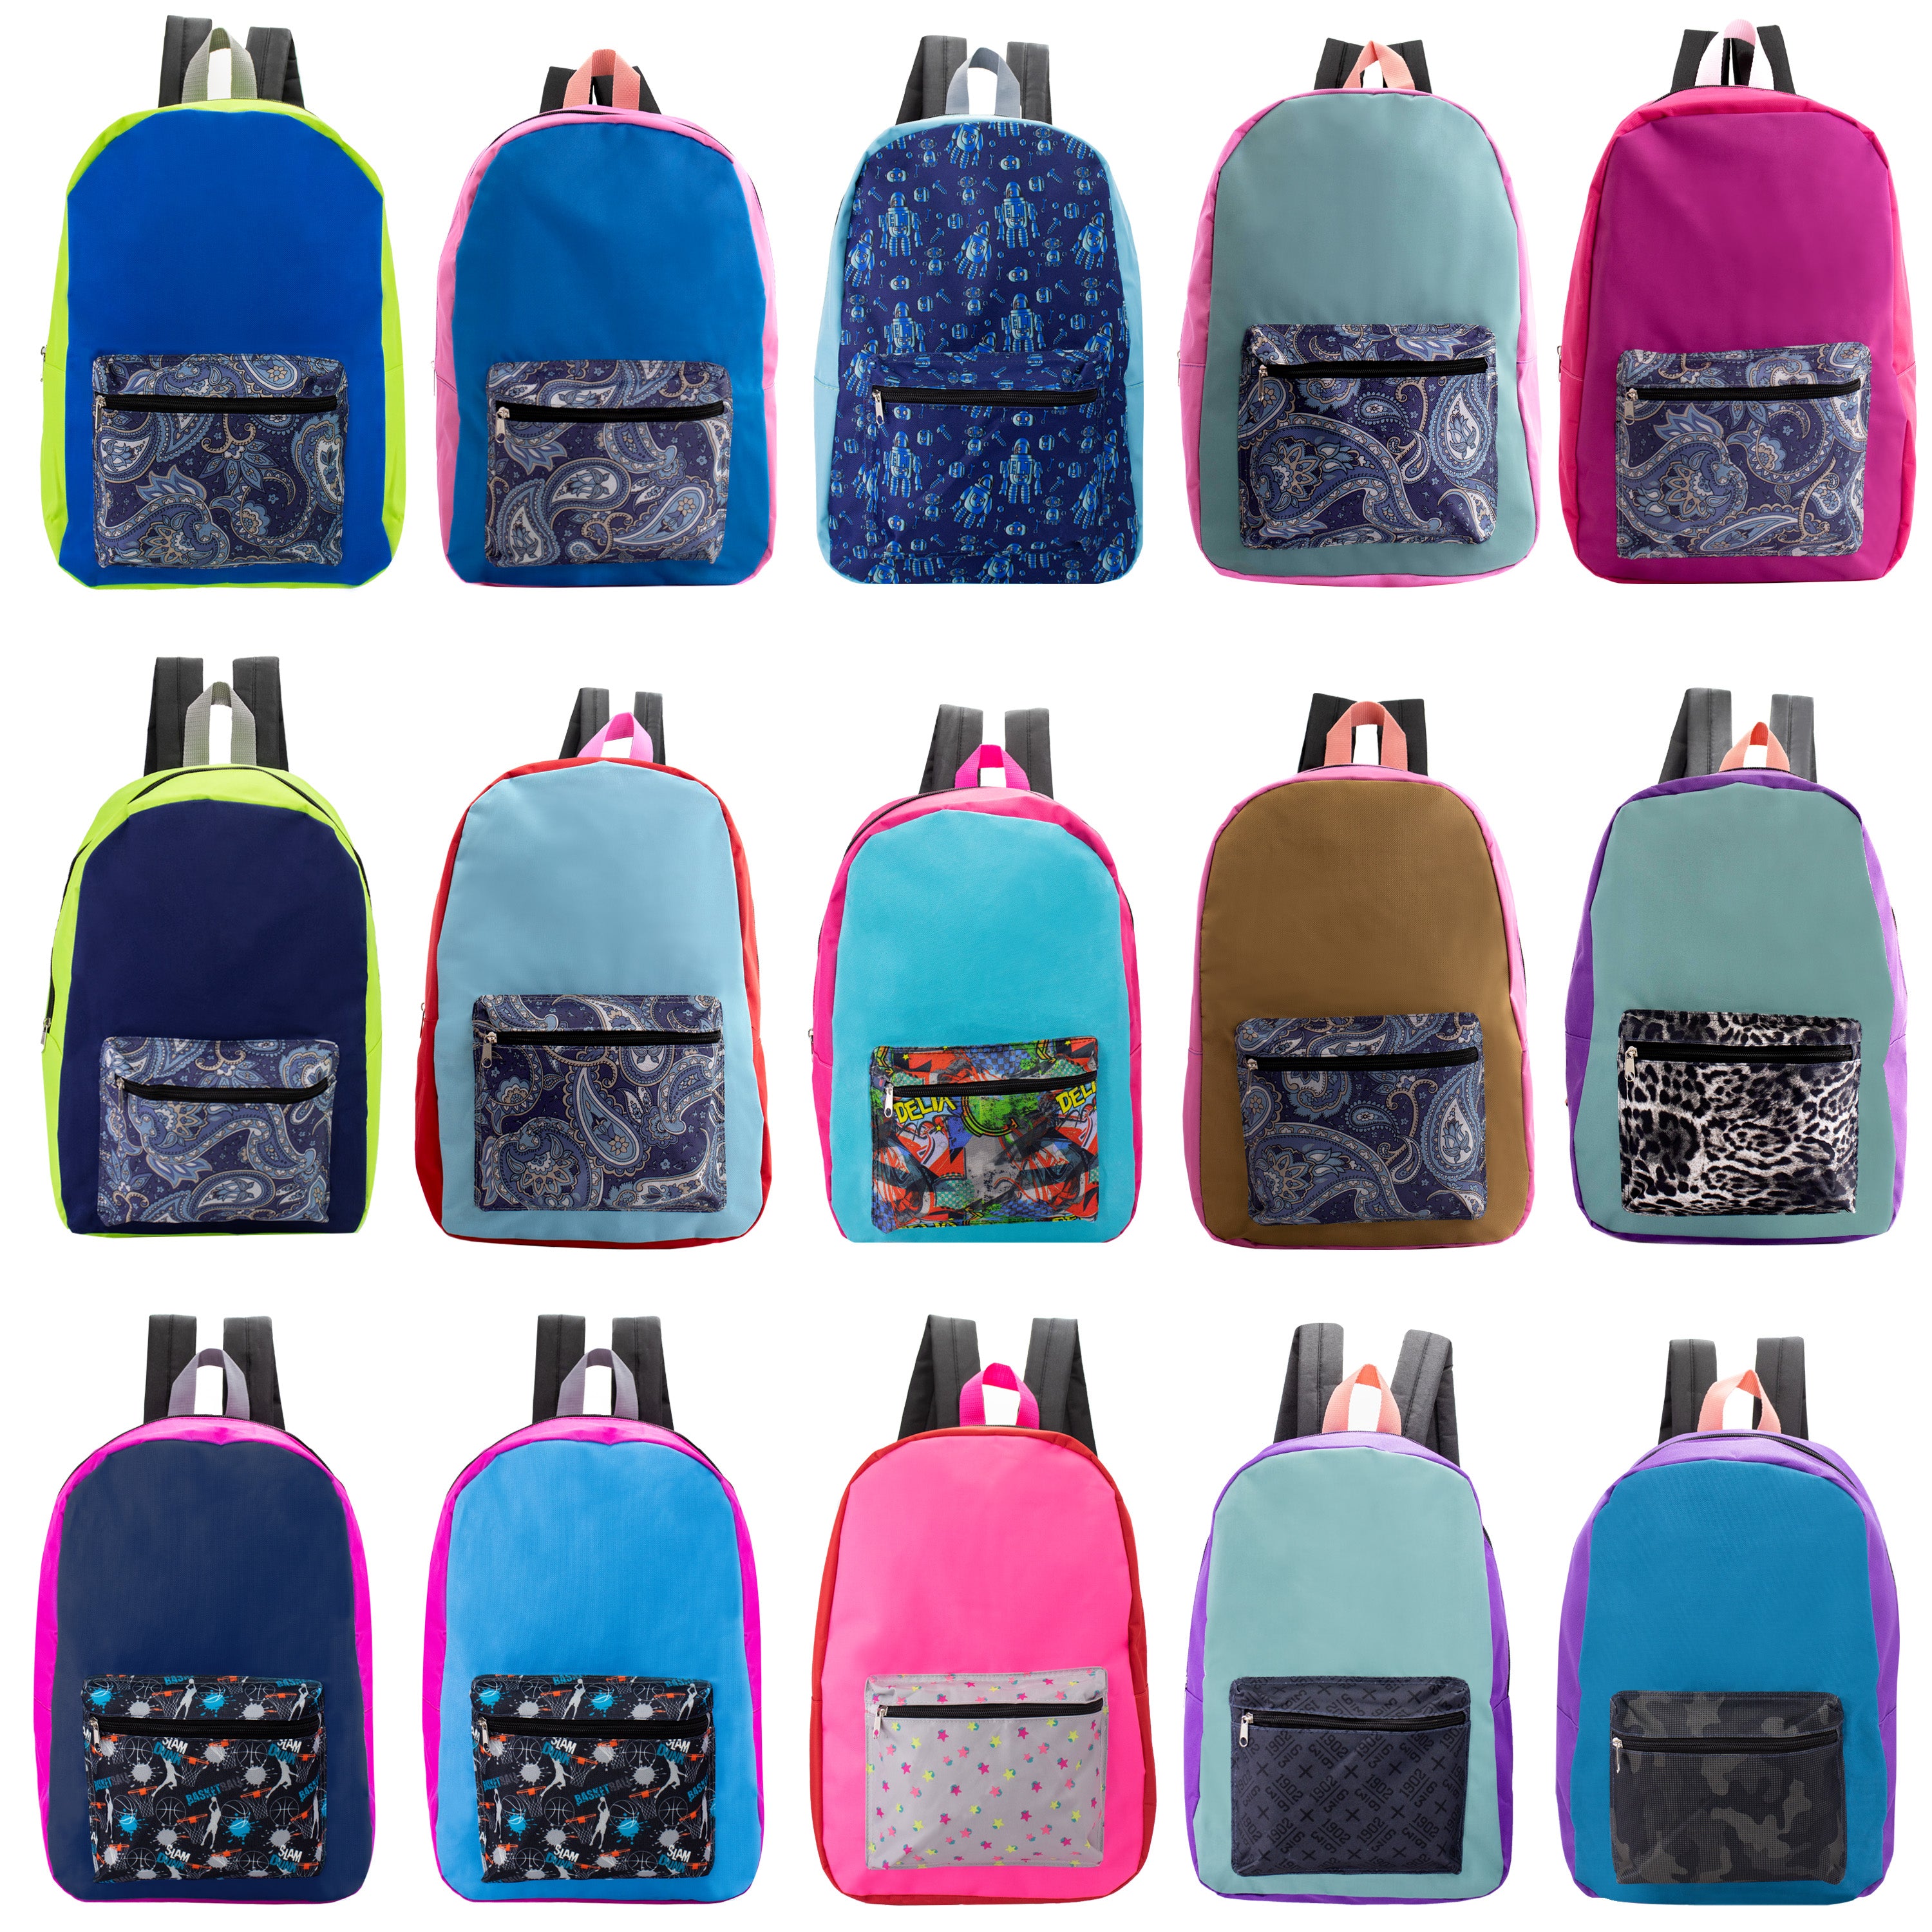 17 Kids Basic Wholesale Backpack in 8 Colors - Bulk Case of 24